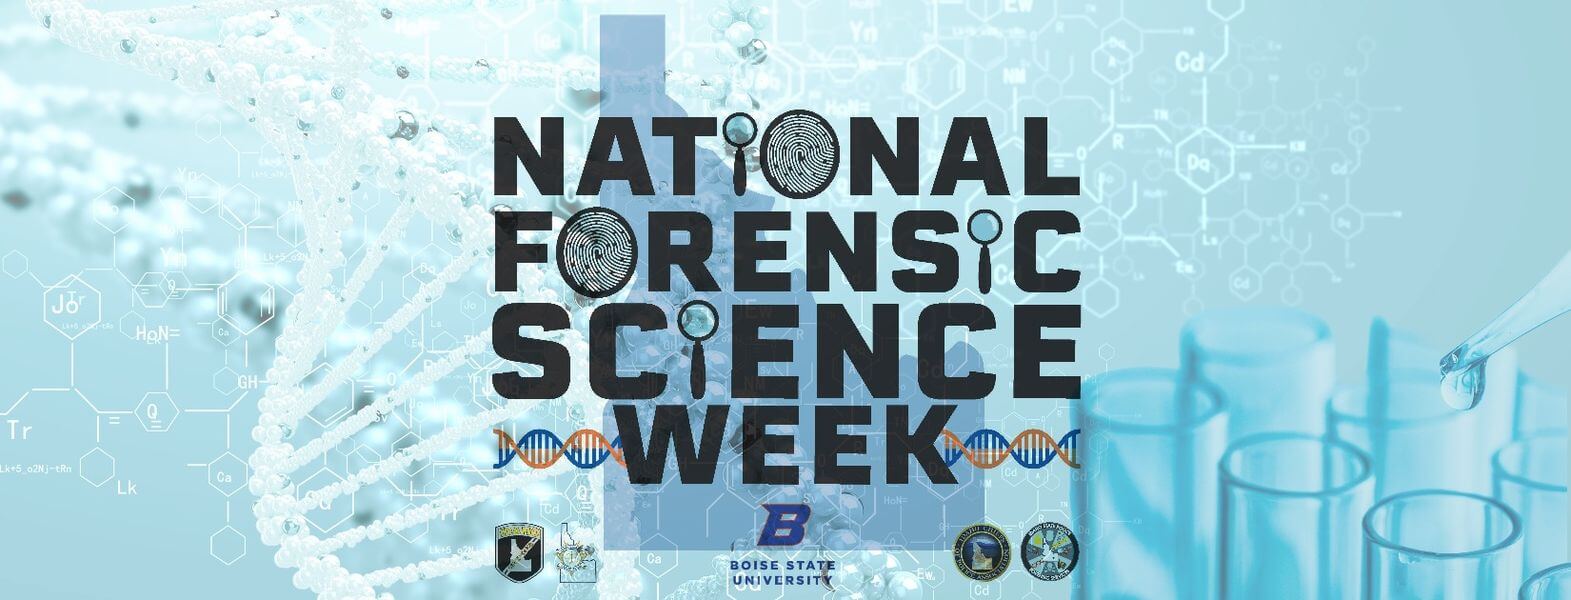 National Forensic Science Week Finding Justice for Joyce Casper